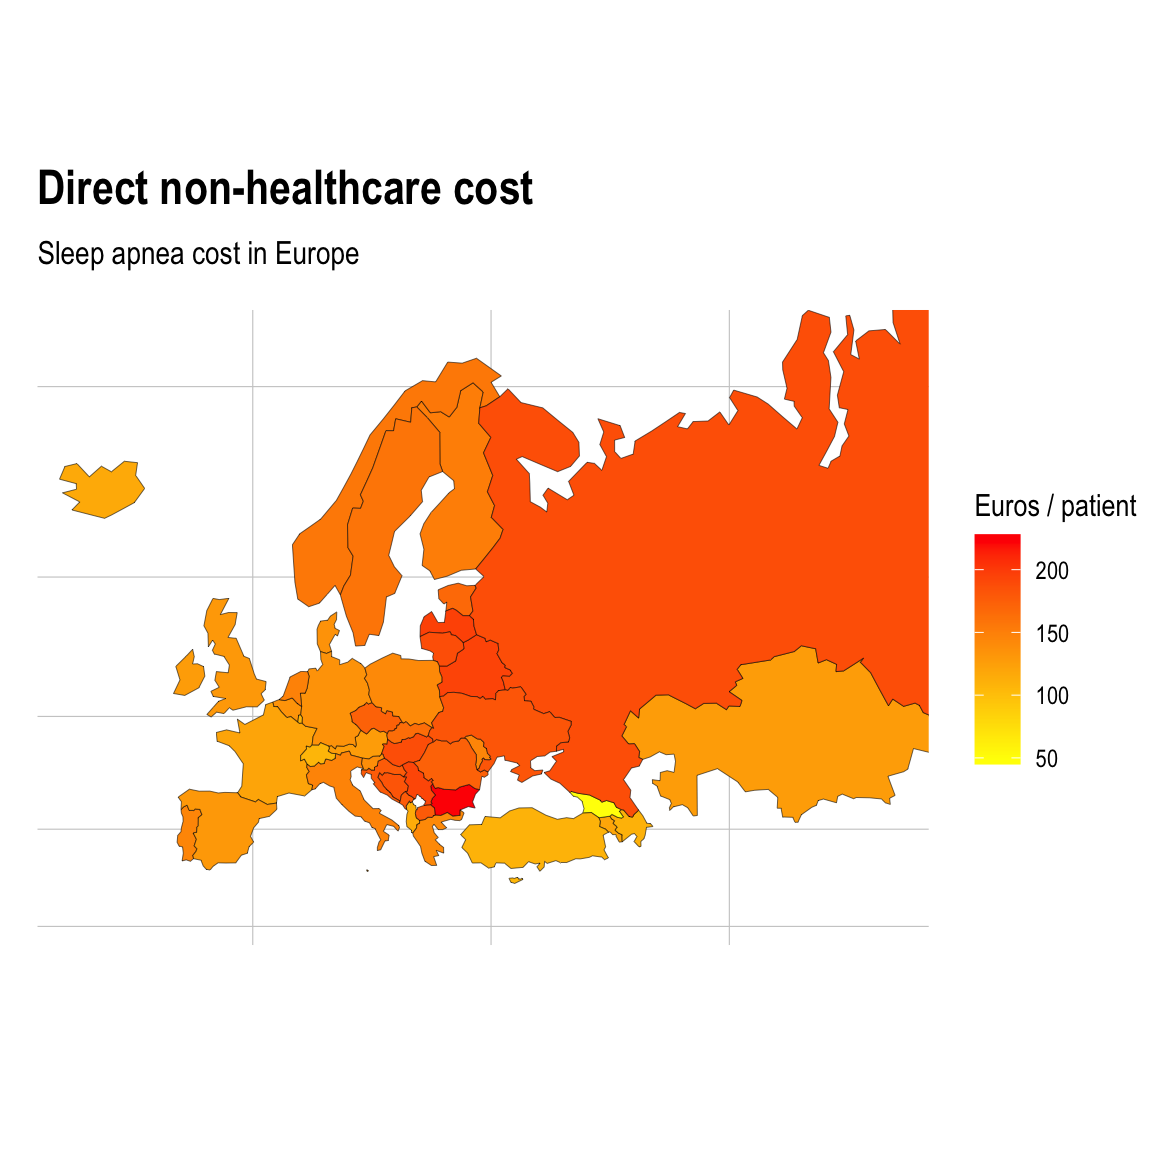 Estimated sleep apnea direct non-healthcare cost per patient in Europe.